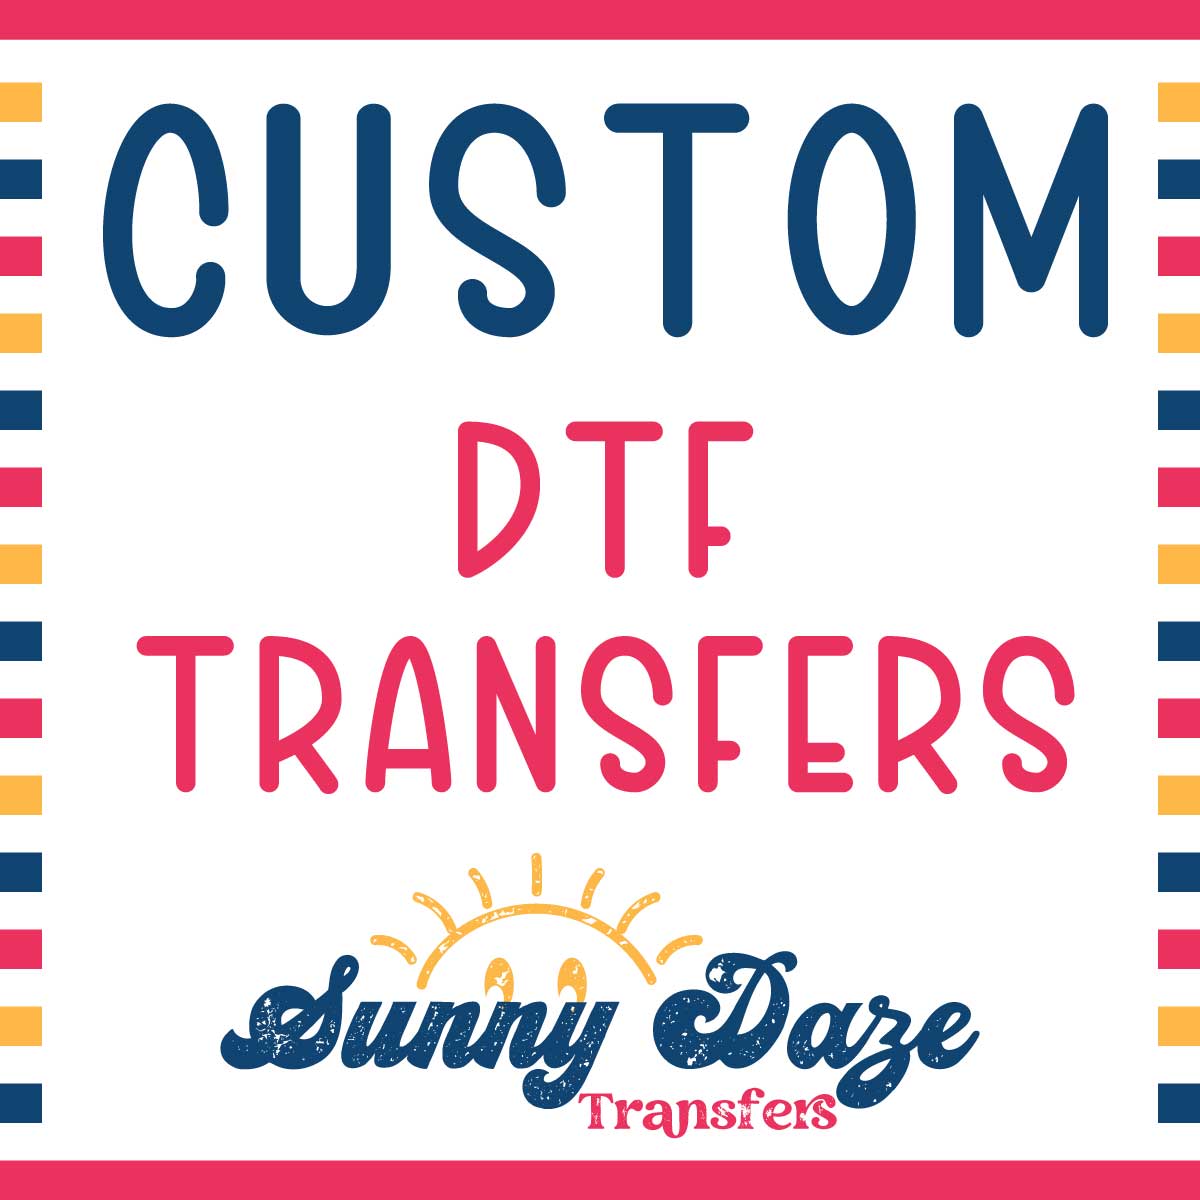 Custom Printed Dtf Transfers